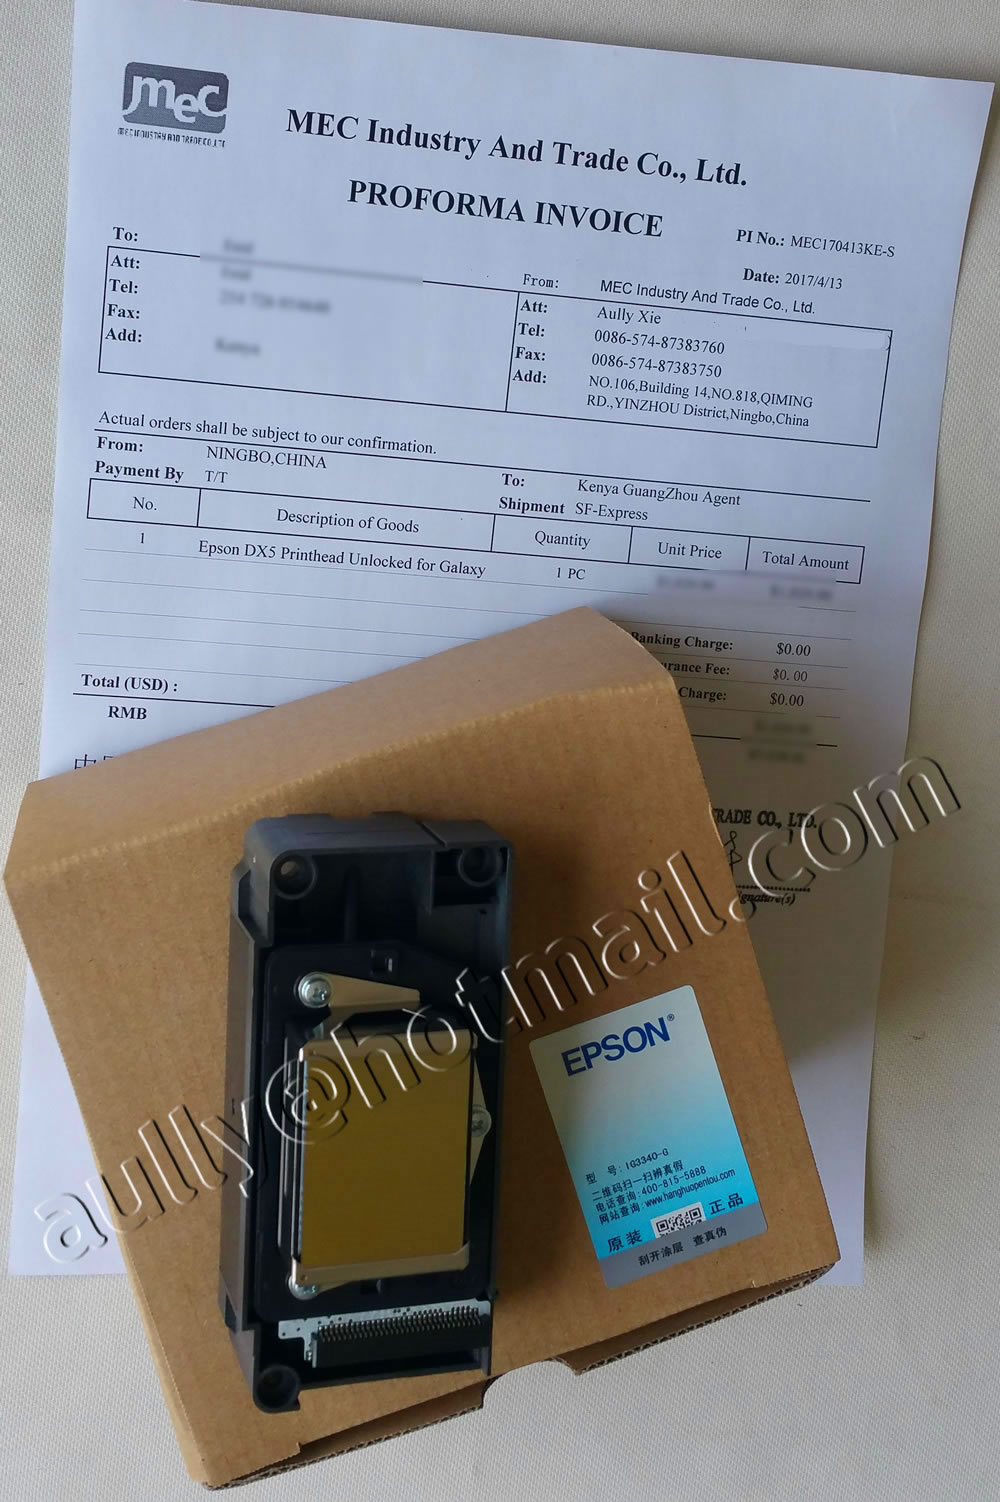 MEC170413KE-S (Epson DX5 Printhead Unlocked for Galaxy) to Kenya GuangZhou Agent